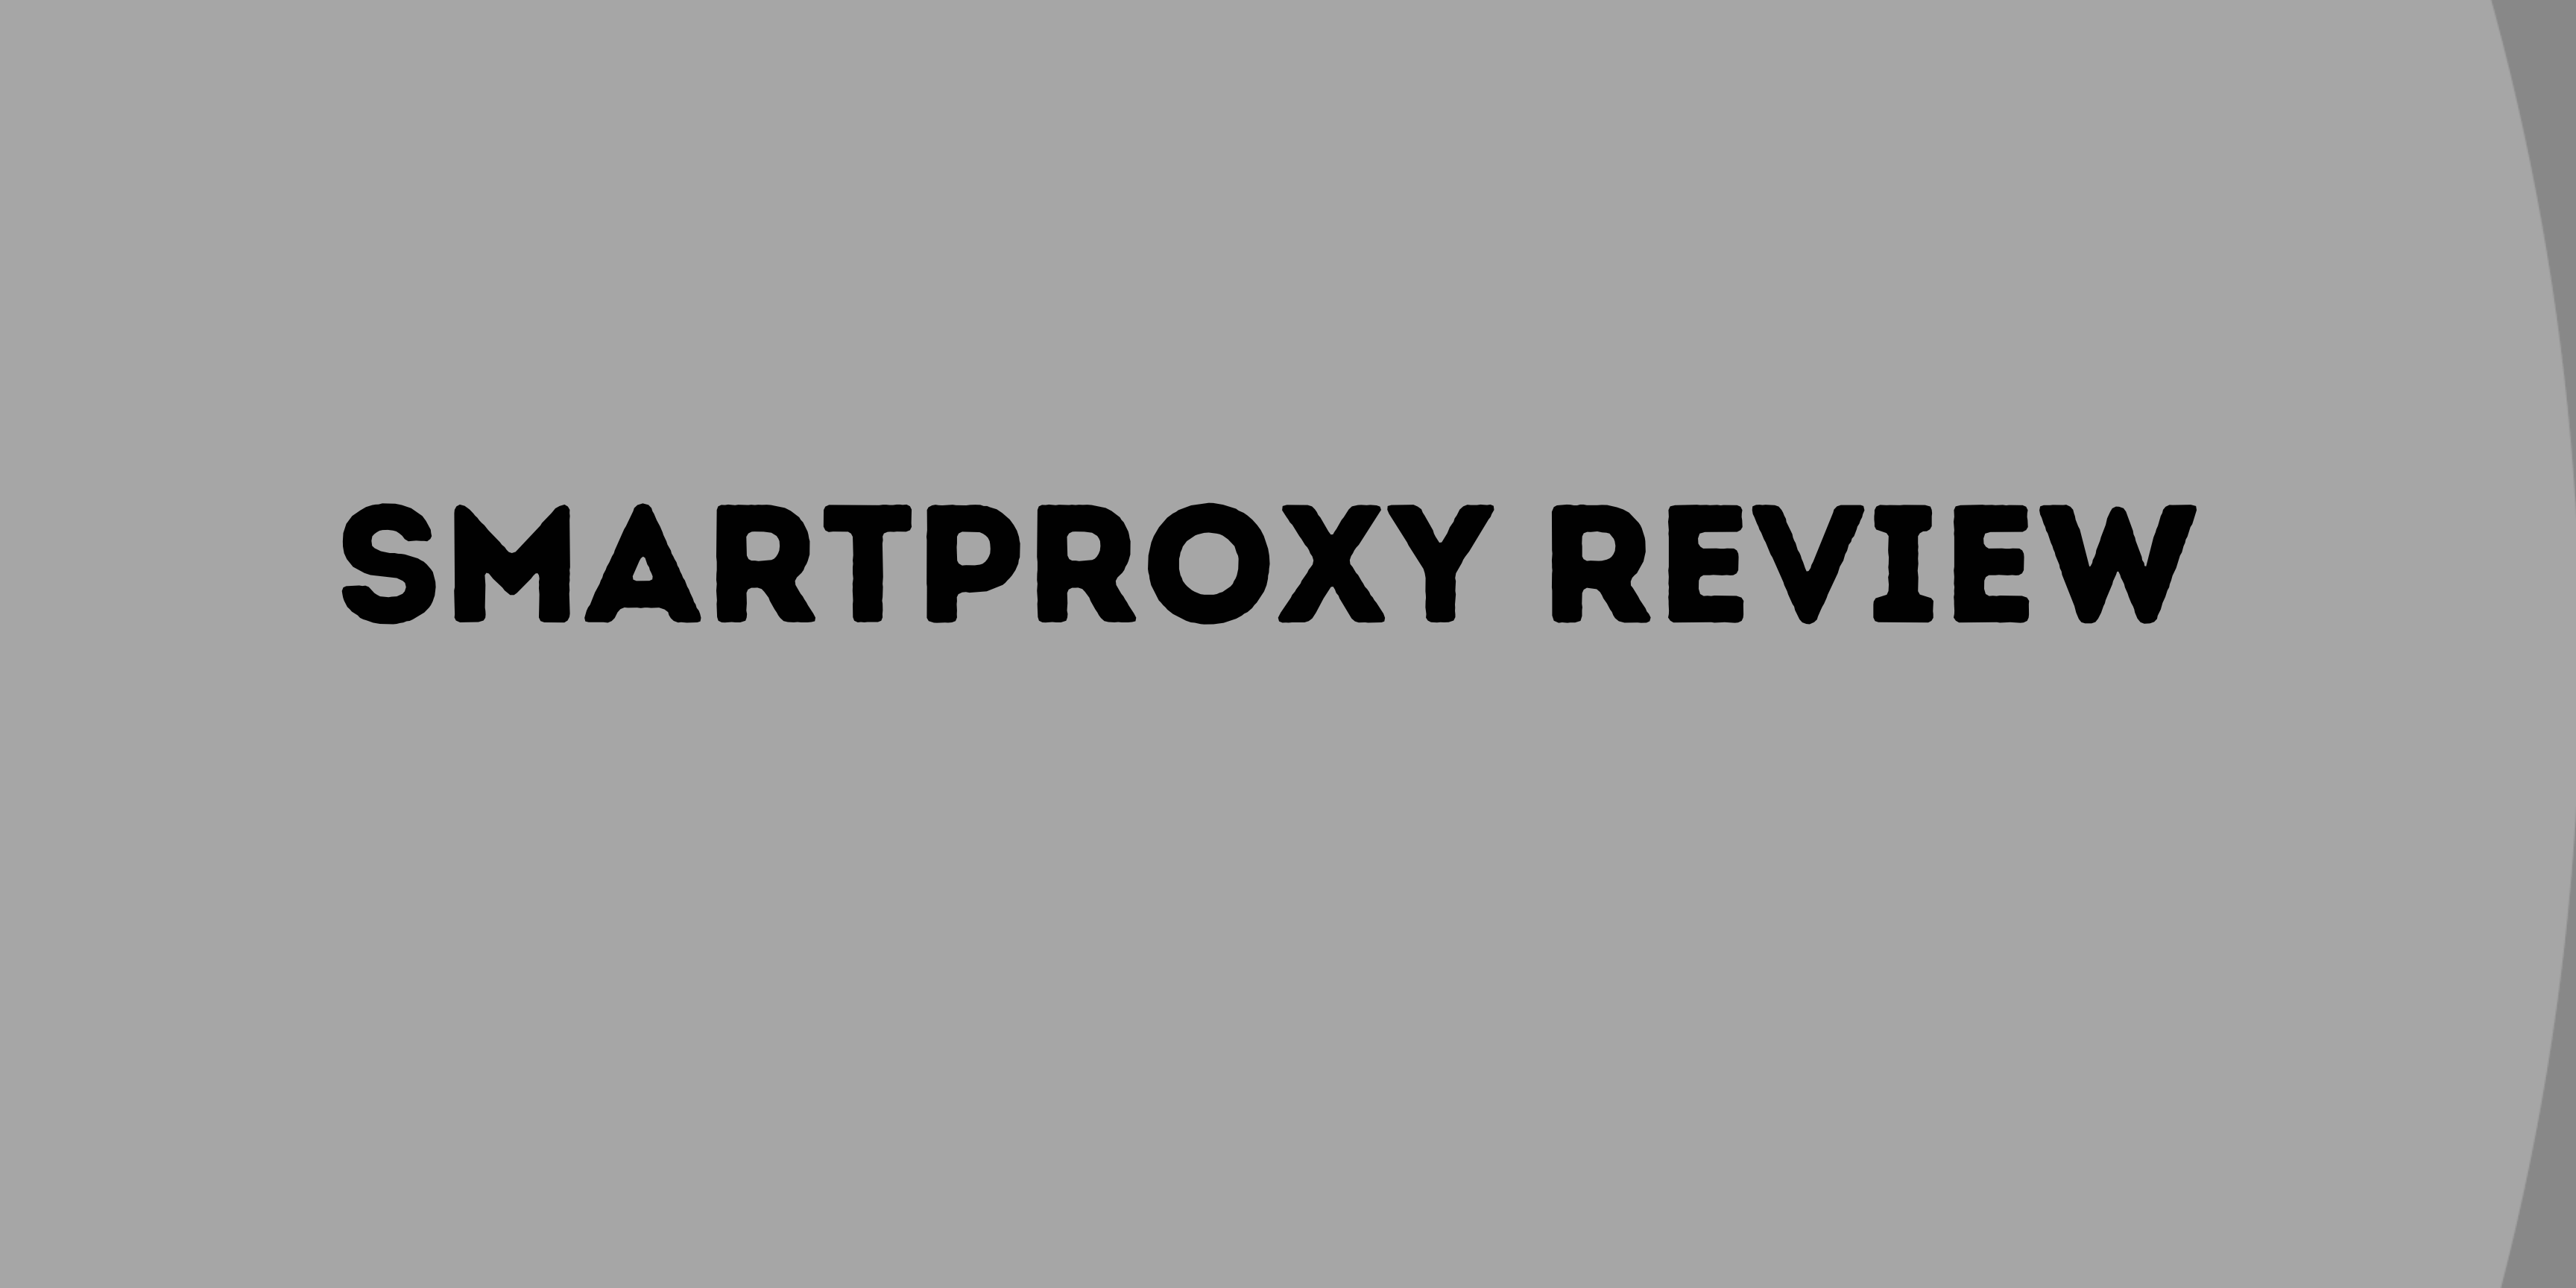 Smartproxy review